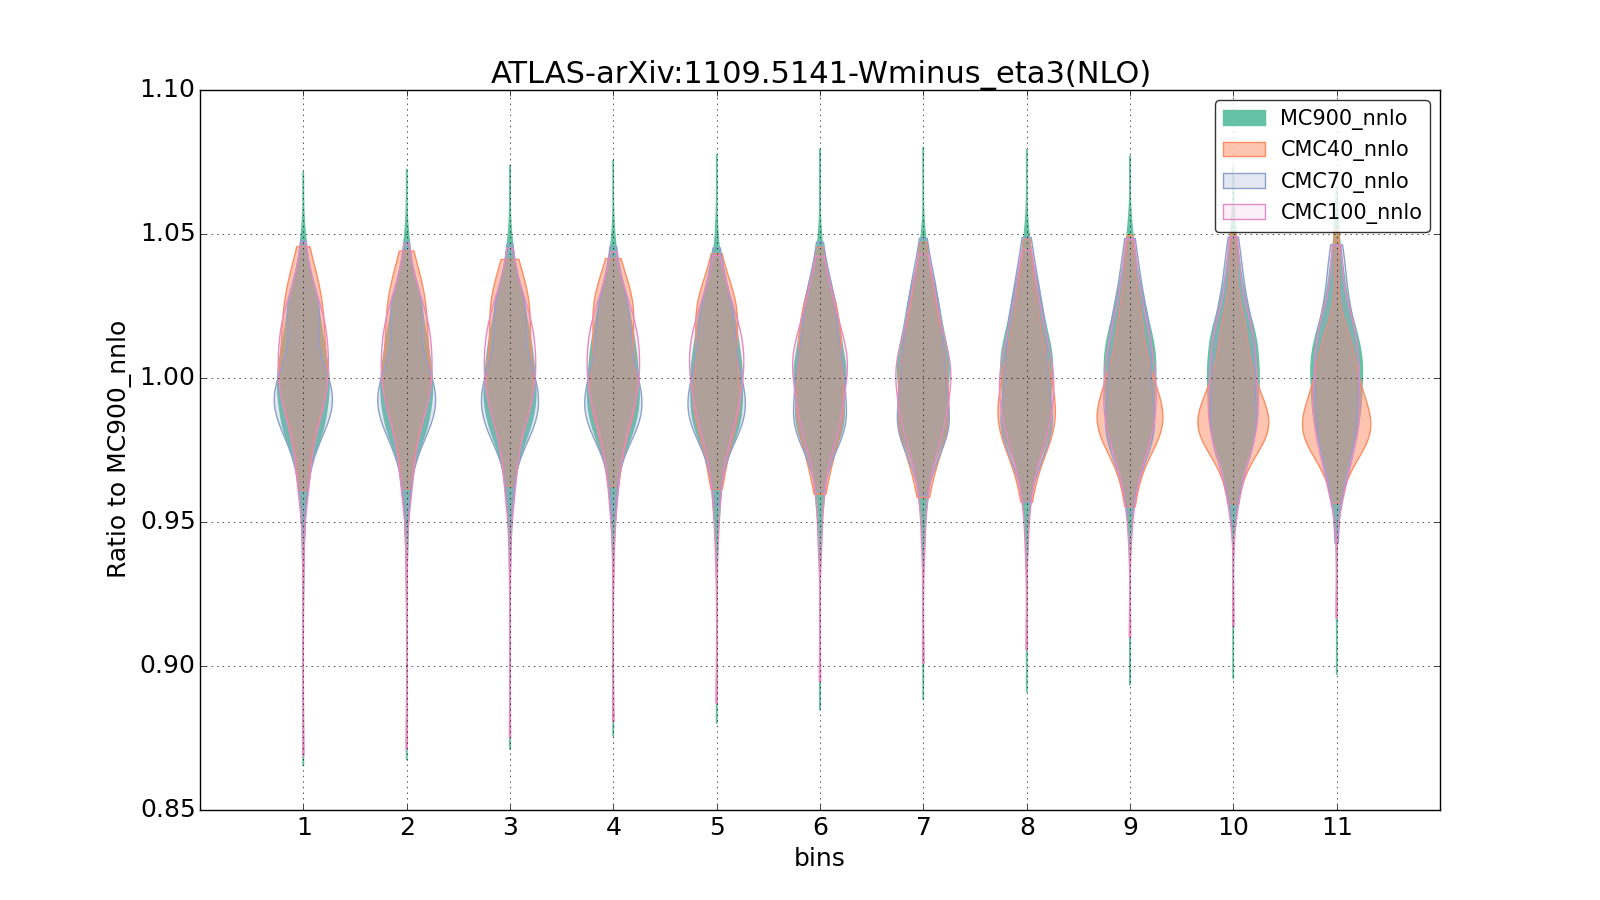 figure plots/CMCpheno/group_0_violinplot_ATLAS-arXiv:11095141-Wminus_eta3(NLO).png